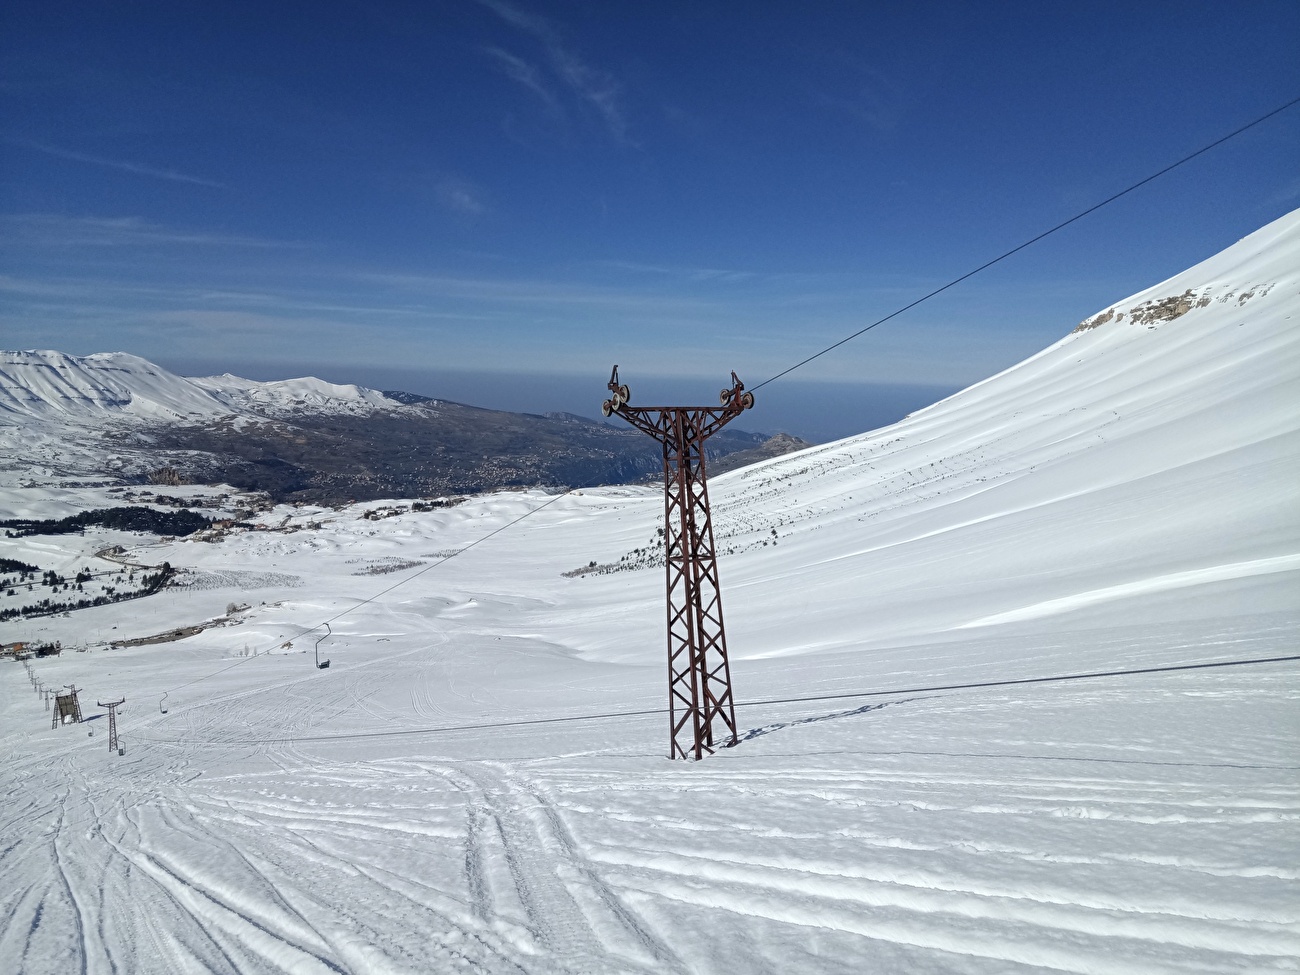 Lebanon ski mountaineering